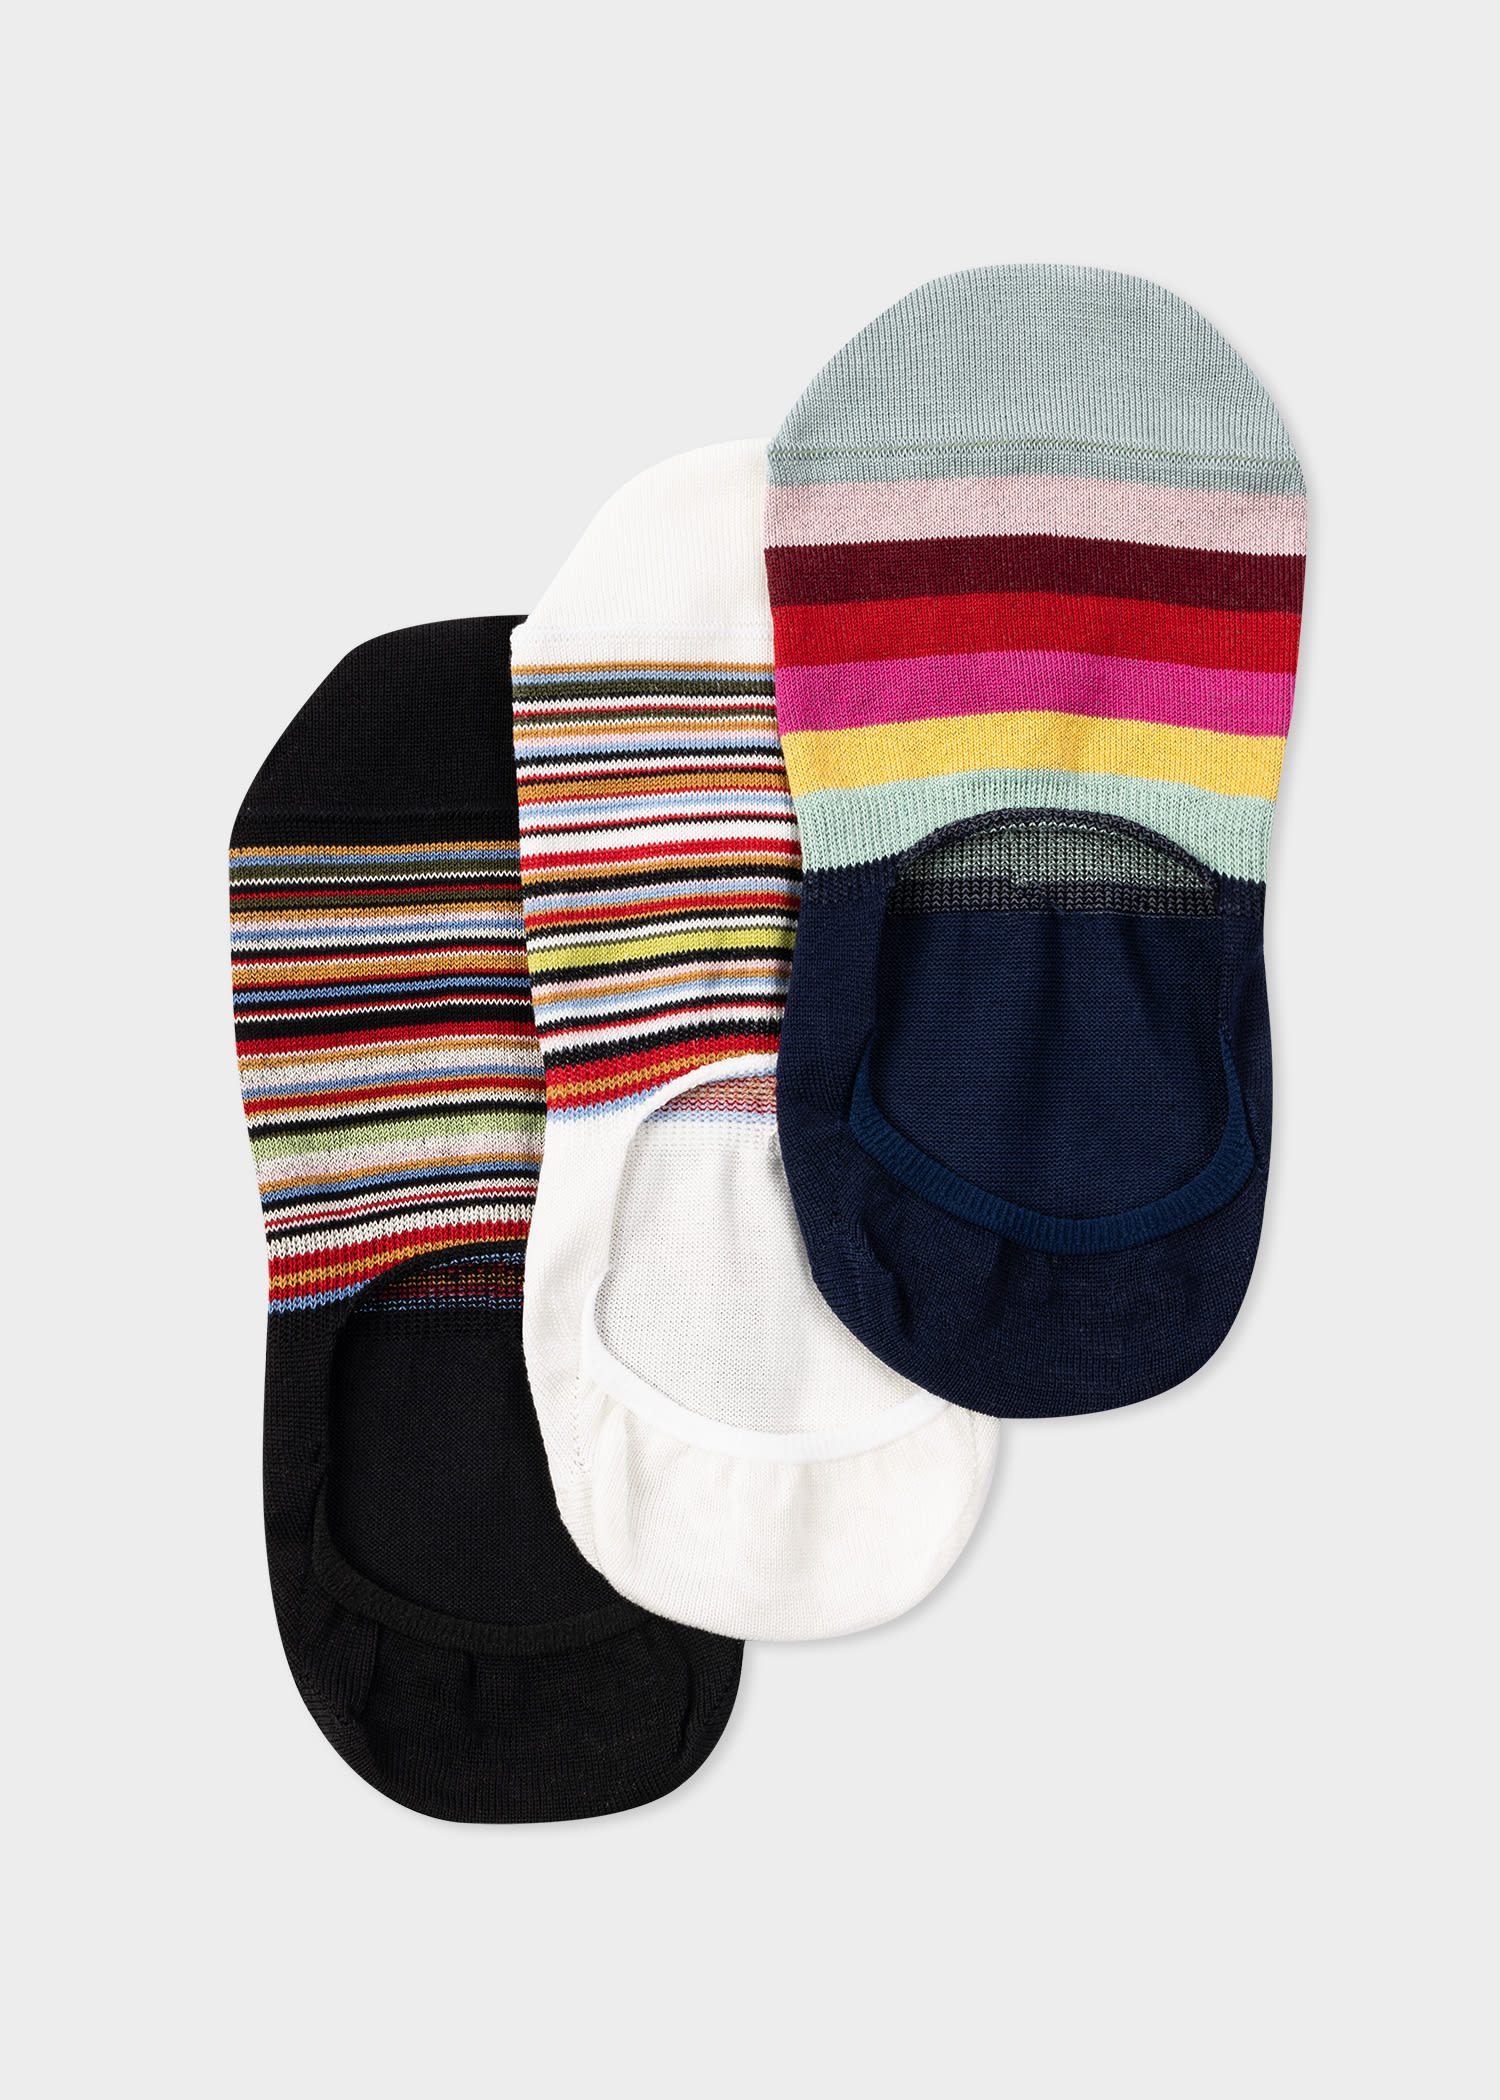 Paul Smith Women's Stripe Loafer Socks Three Pack Multicolour